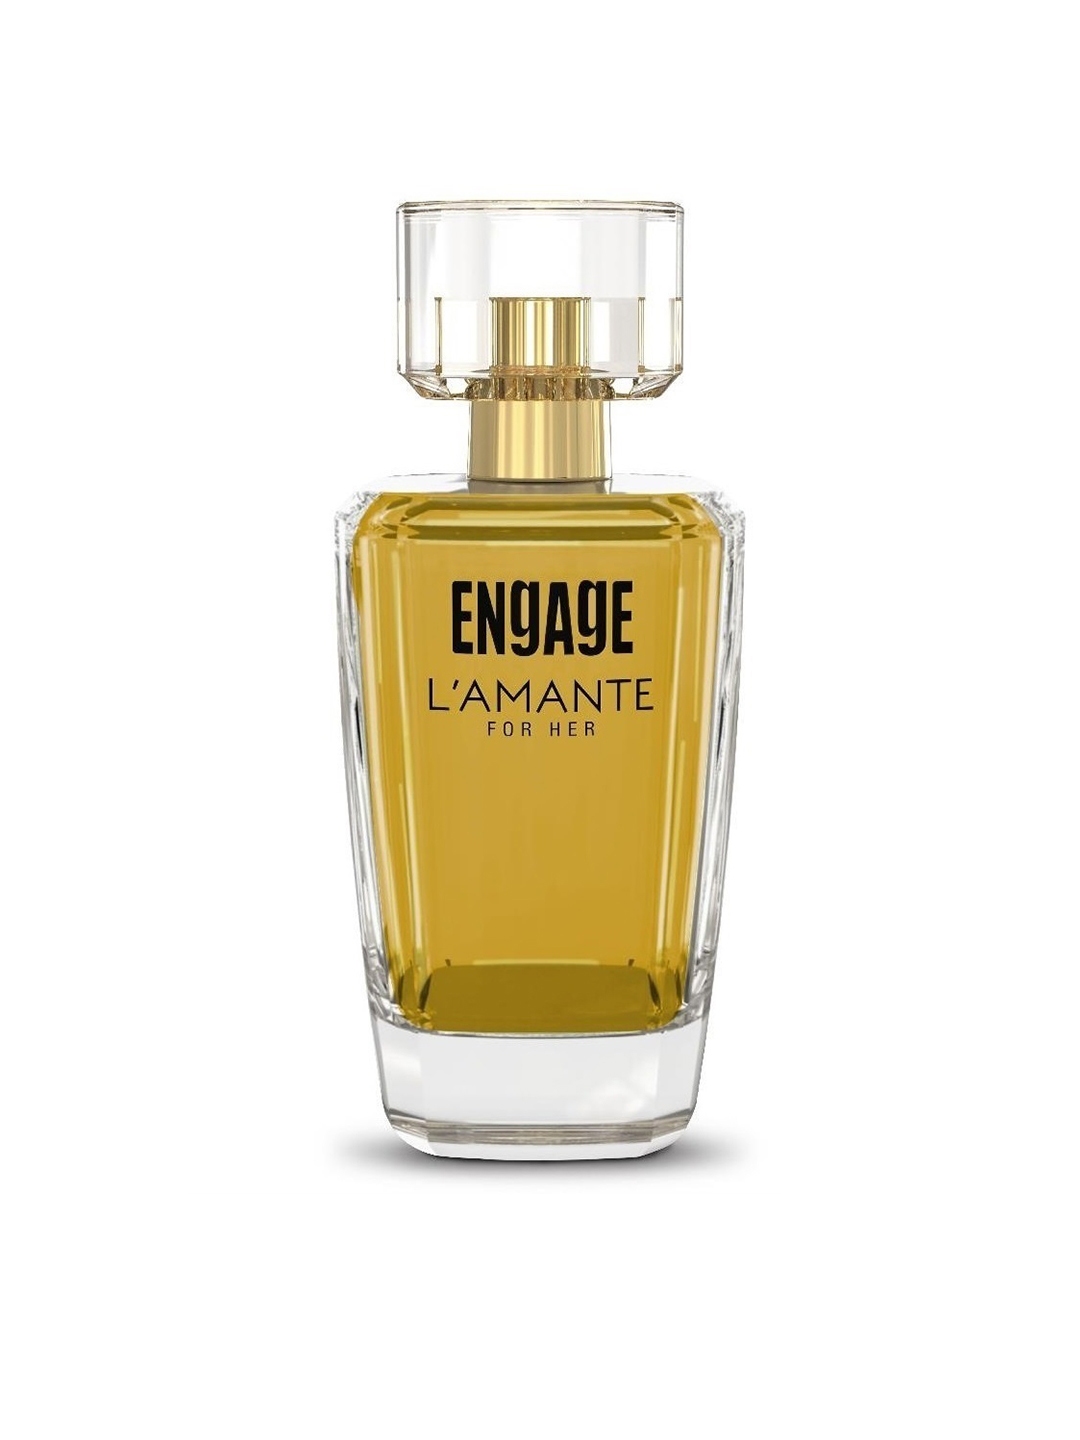 Buy Engage Lamante For Her Eau De Toilette 75ml Perfume For Women 10084611 Myntra 6280